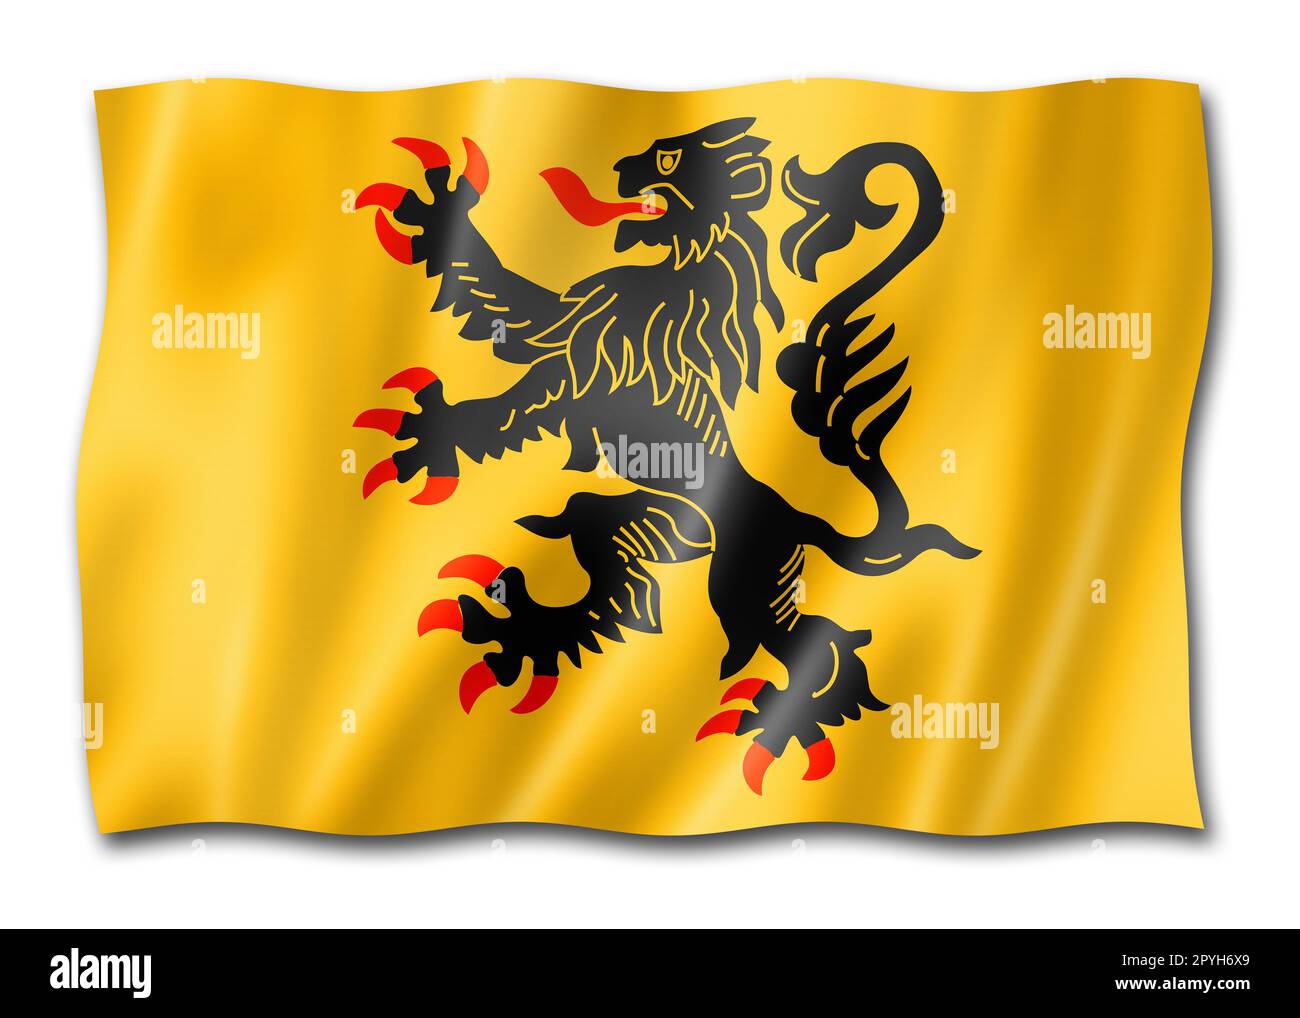 Nord-Pas-de-Calais Region flag, France waving banner collection. 3D ...